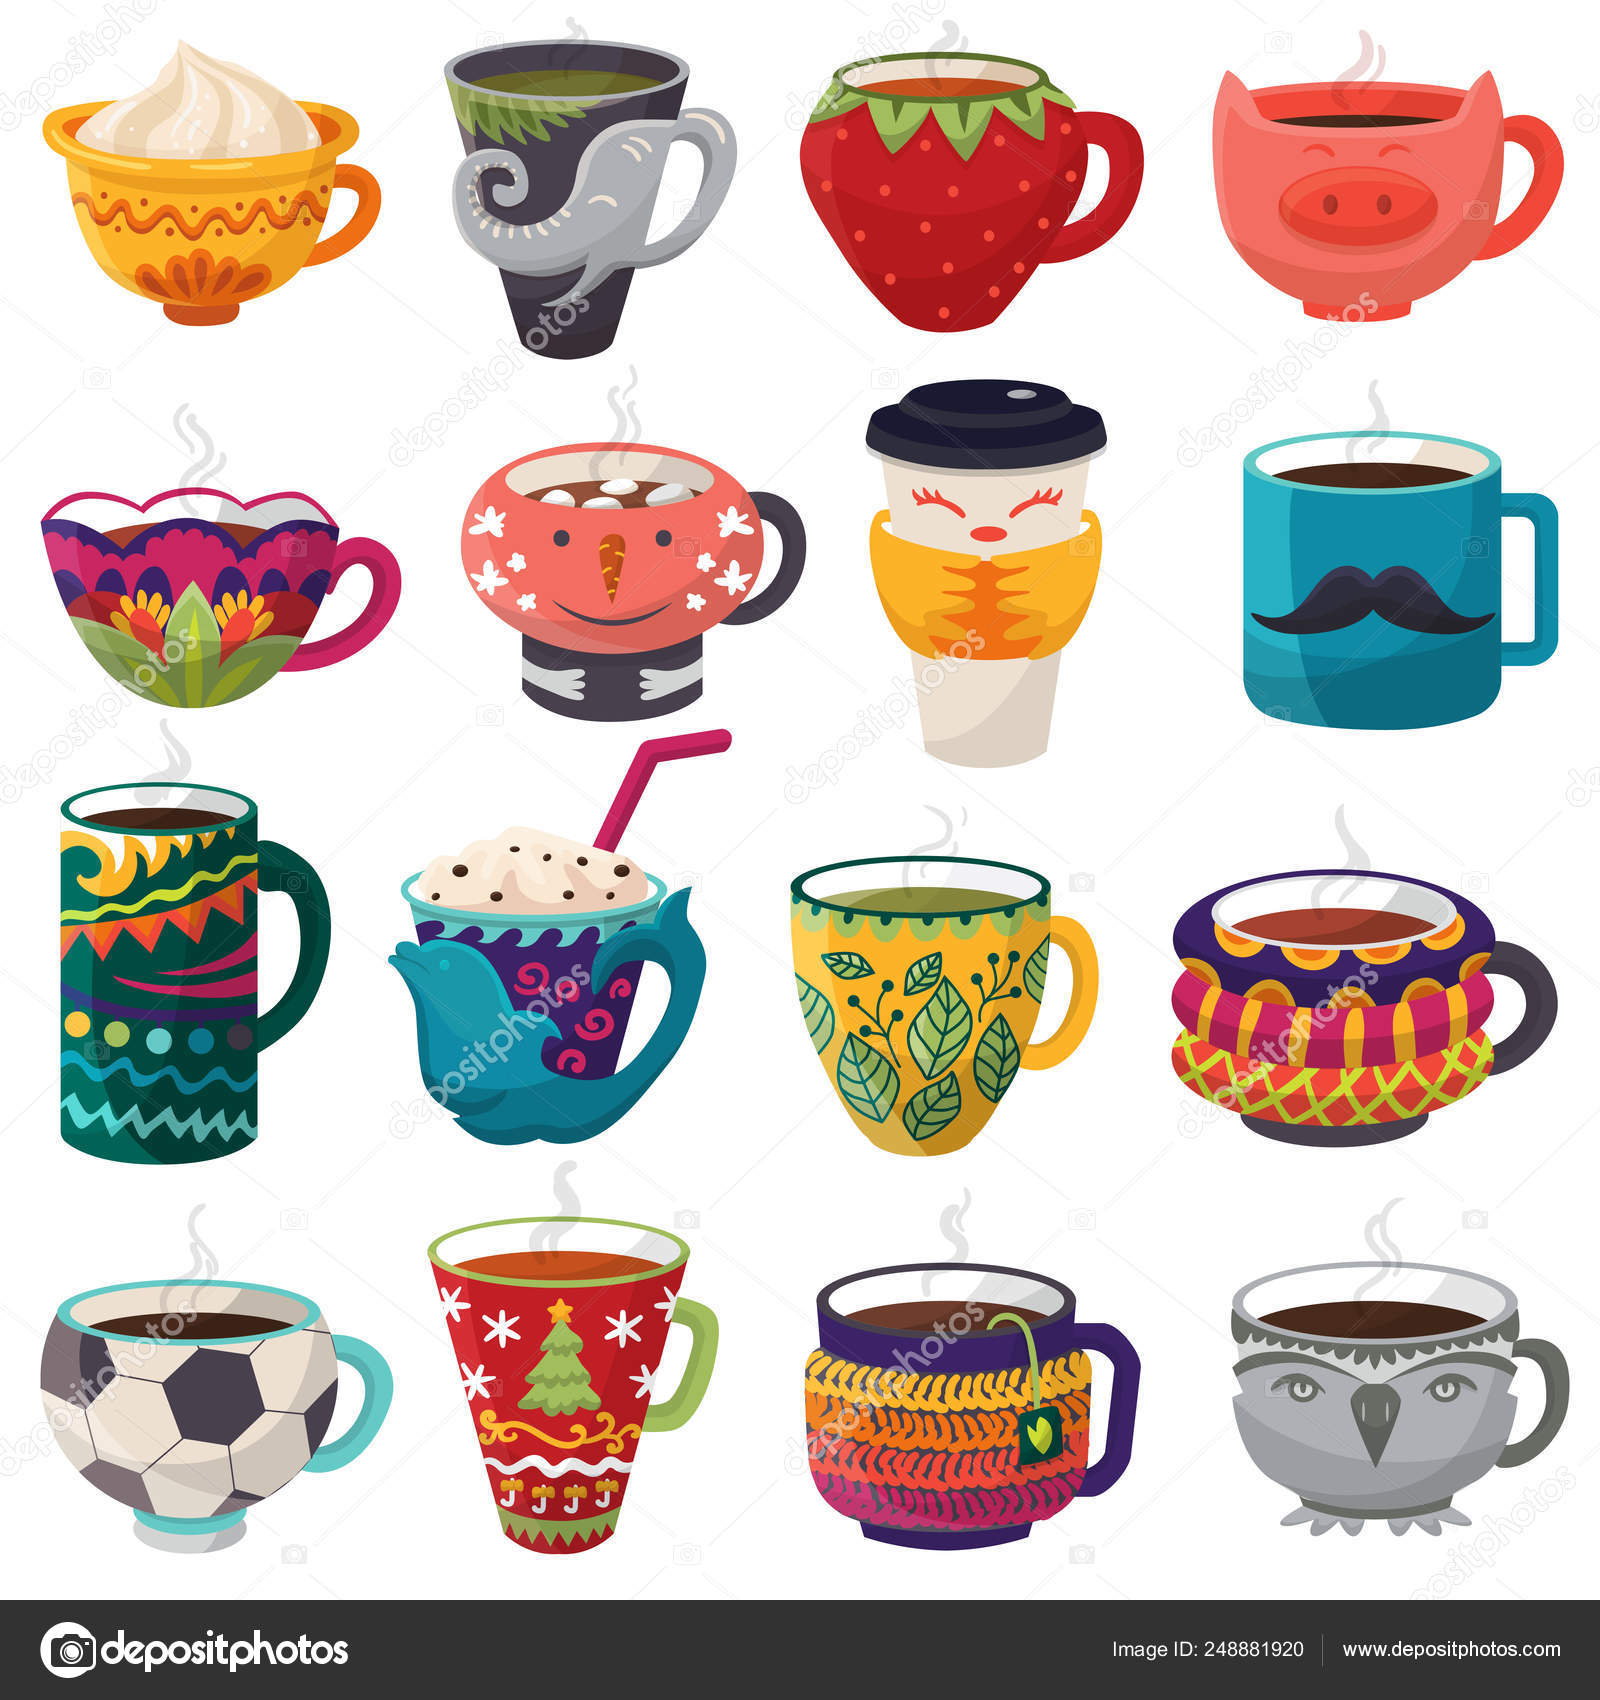 https://st4.depositphotos.com/6741230/24888/v/1600/depositphotos_248881920-stock-illustration-cartoon-cup-vector-kids-creative.jpg